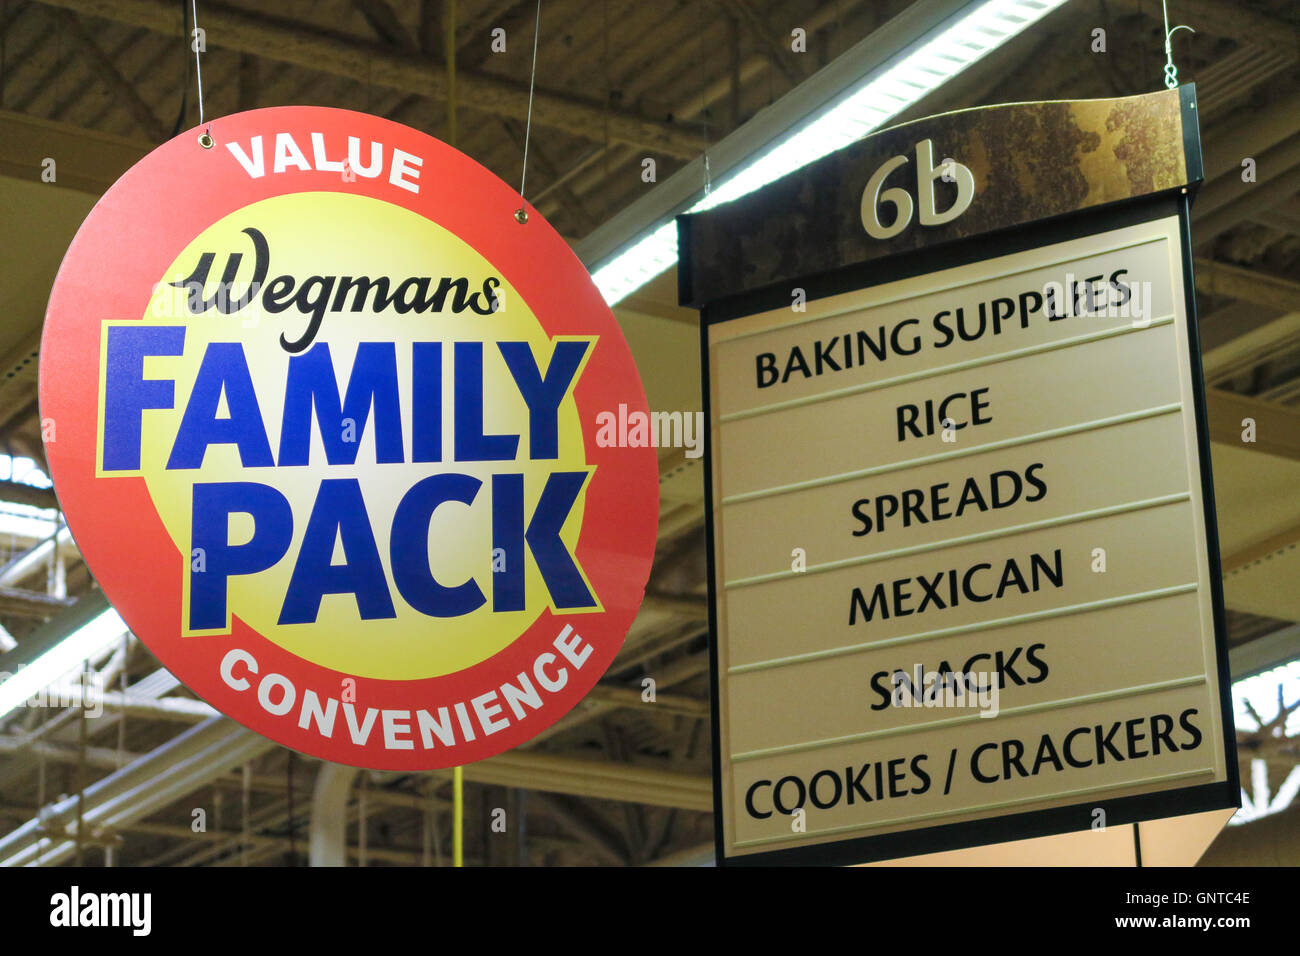 Family Pack Sign, Wegmans Grocery Store, Westwood, Massachusetts, USA Stock Photo